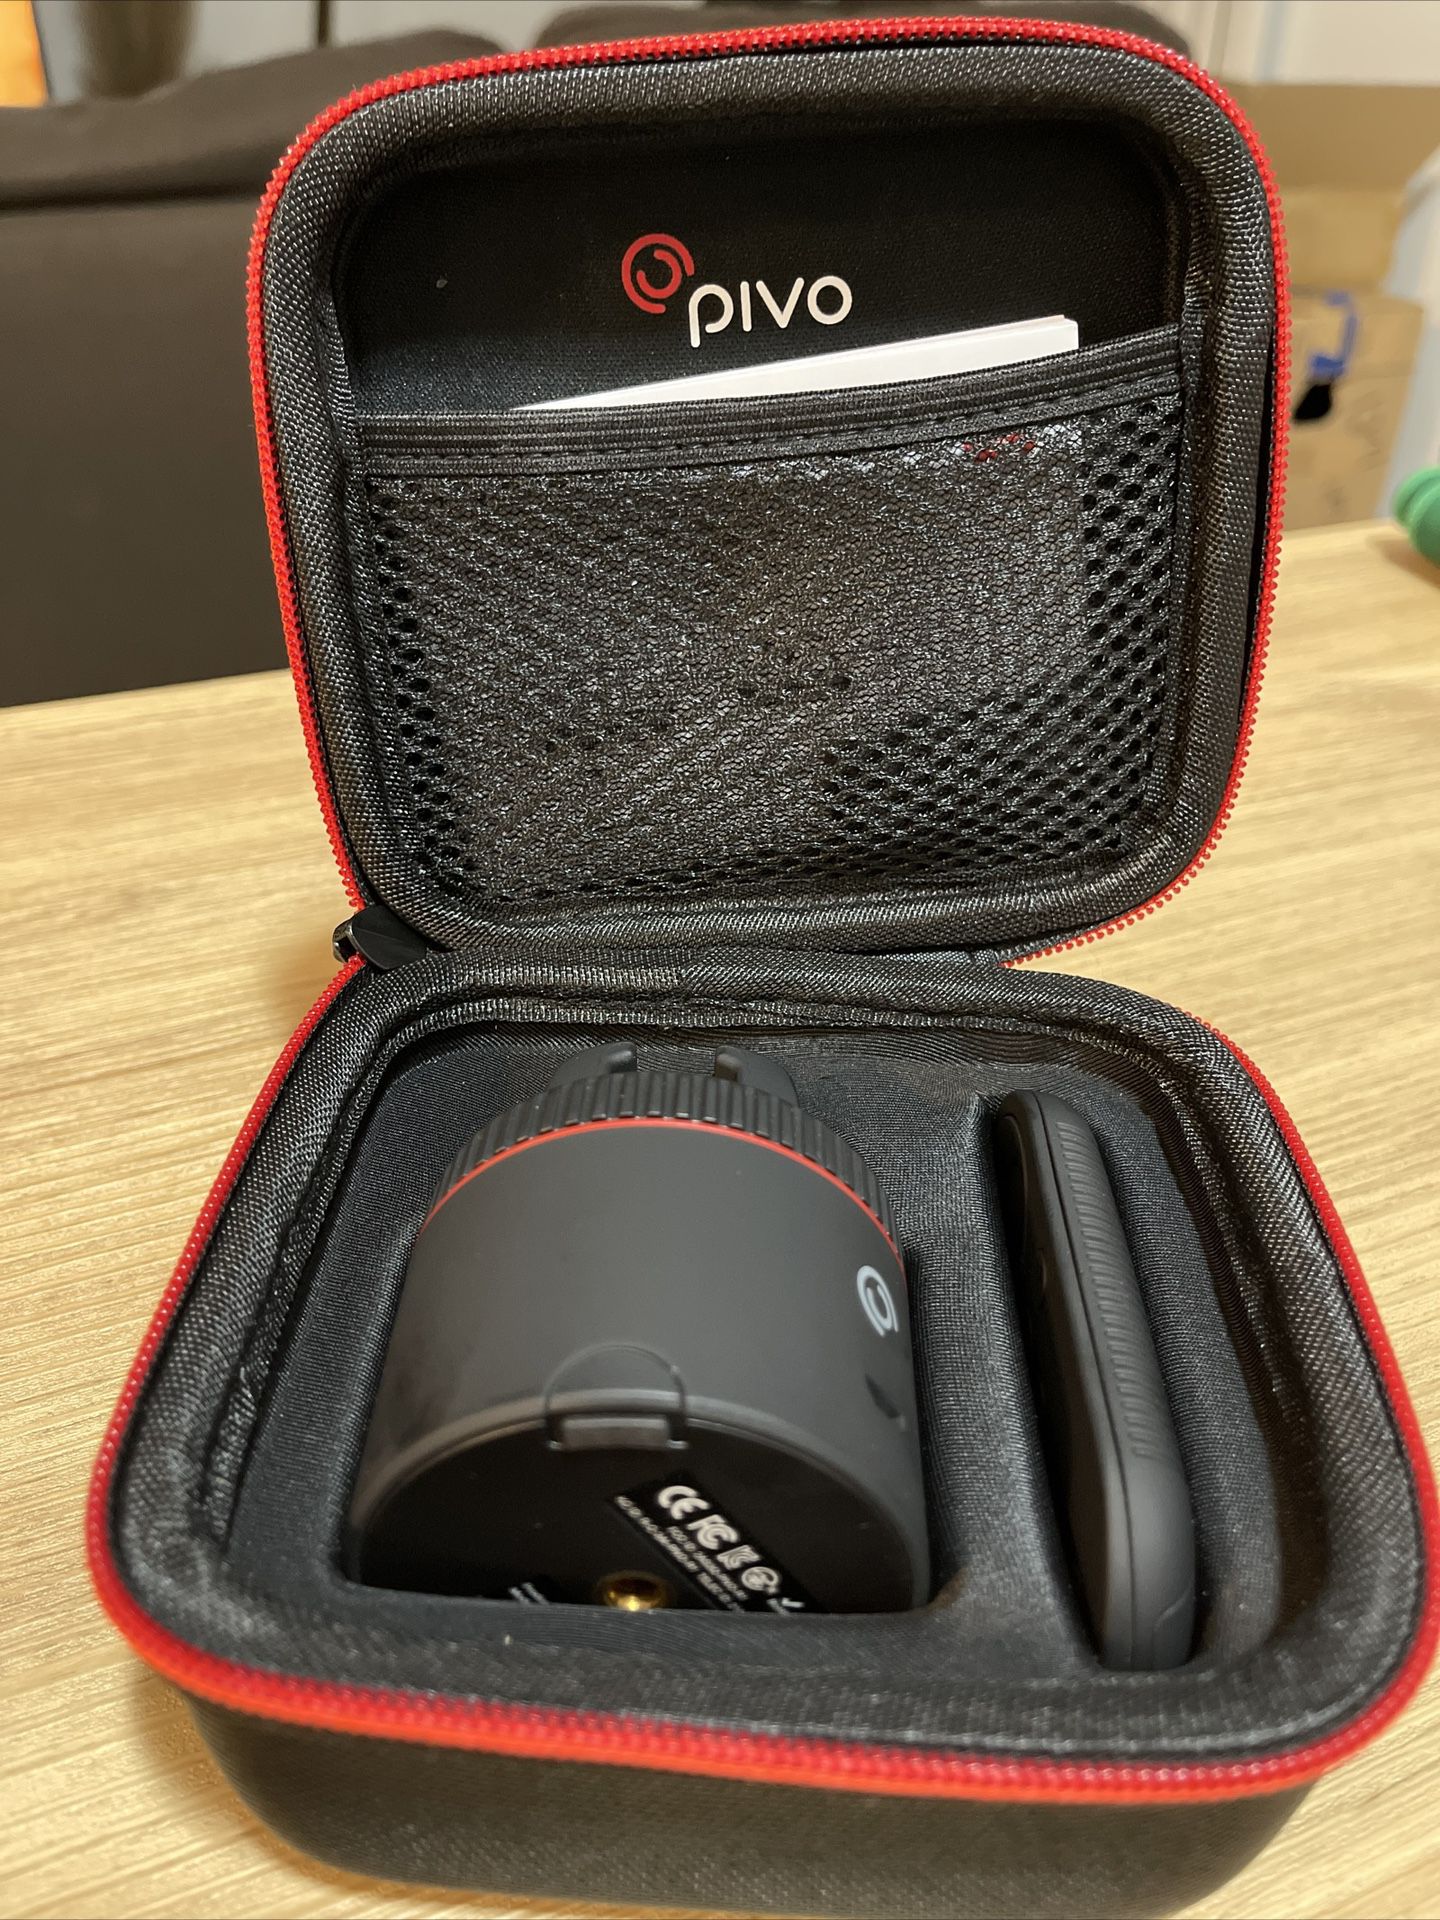 Pivo Pod One Auto Motion Sensor Tracking Smartphone